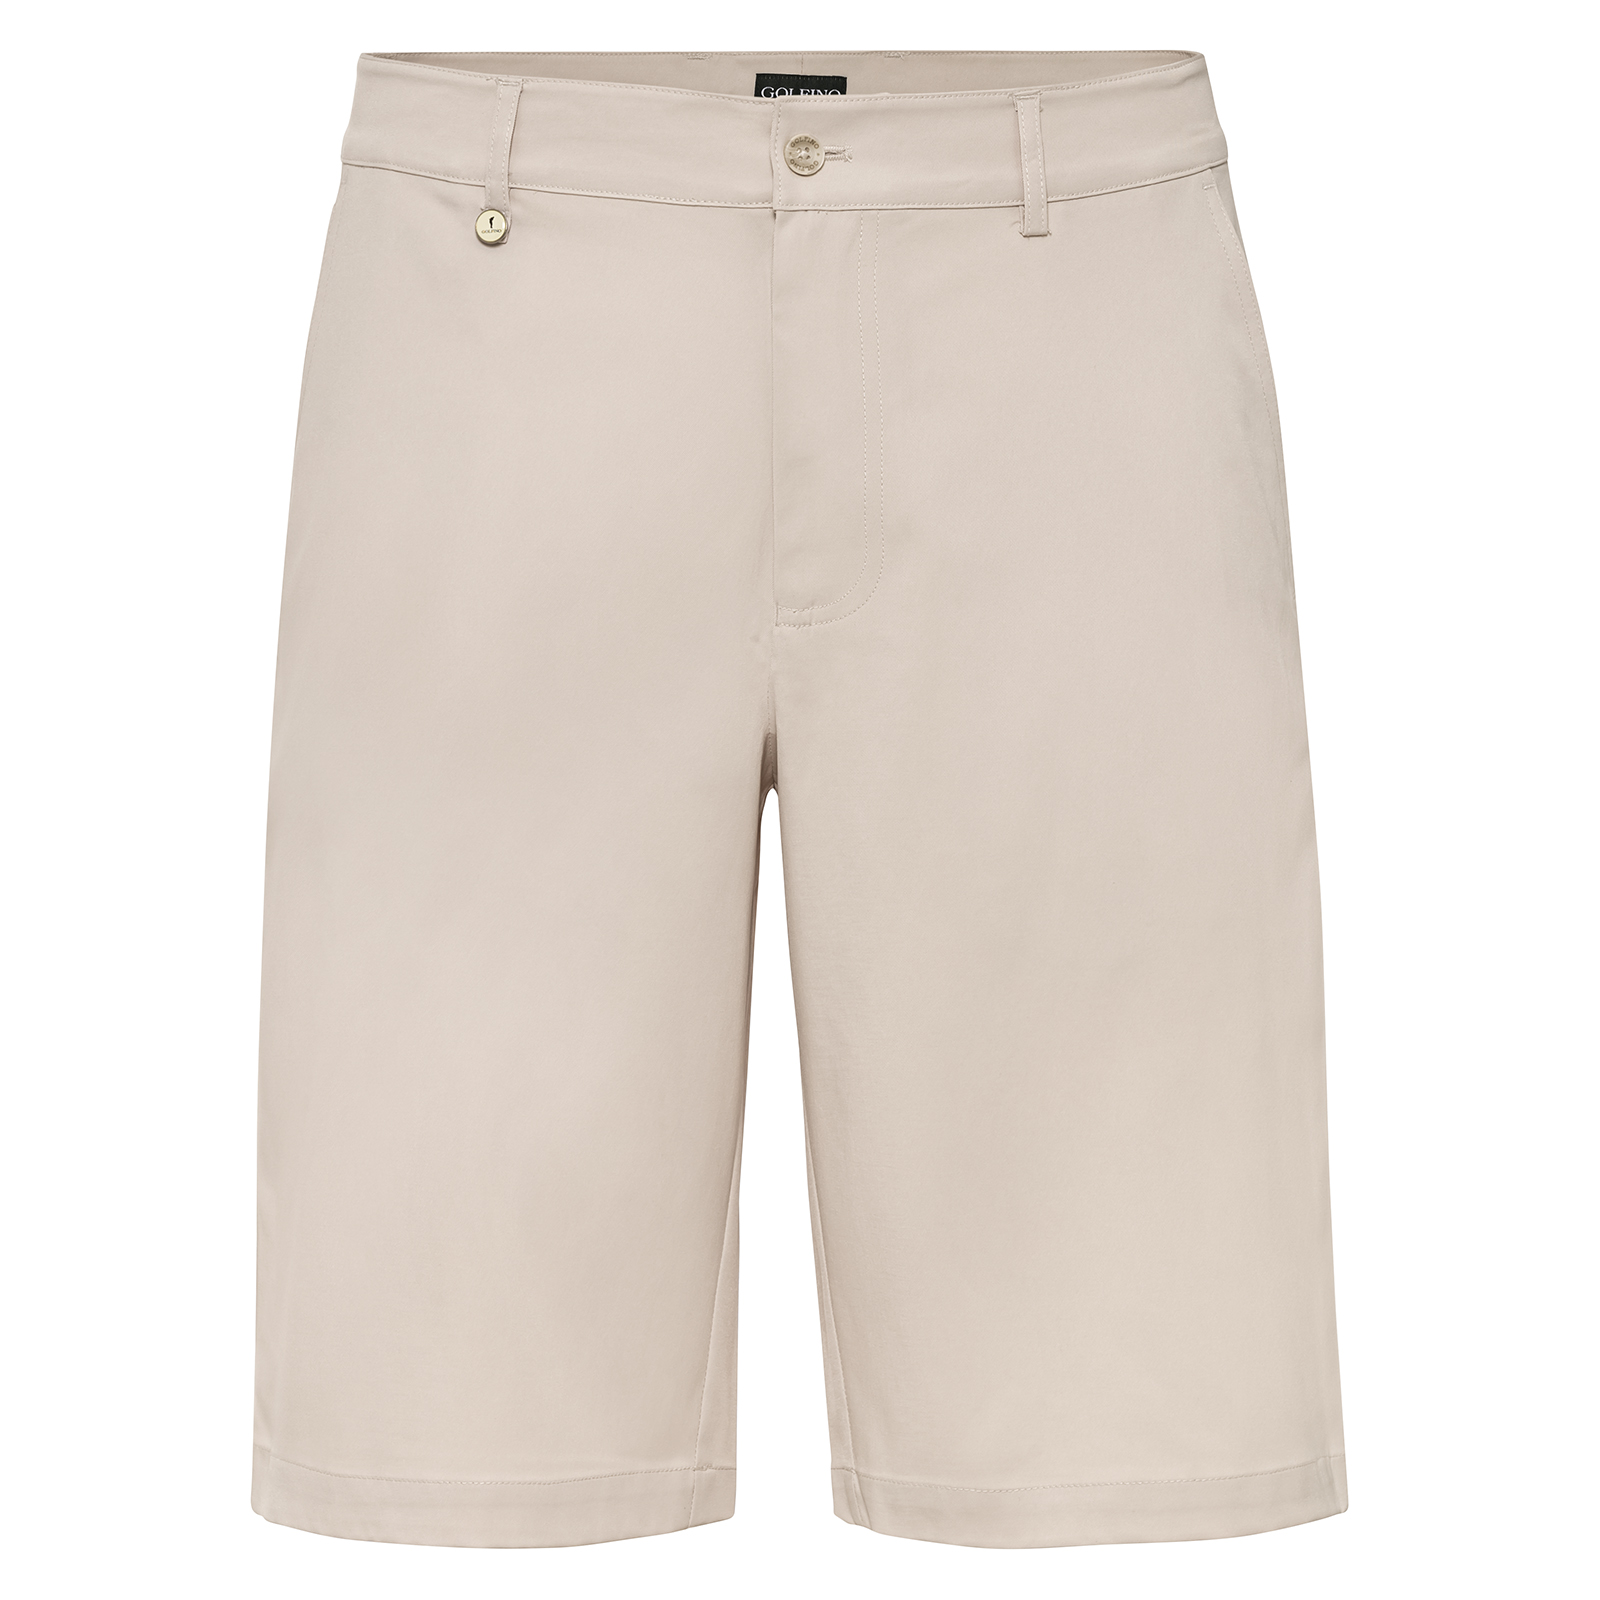 Men's quick dry golf Bermuda shorts 